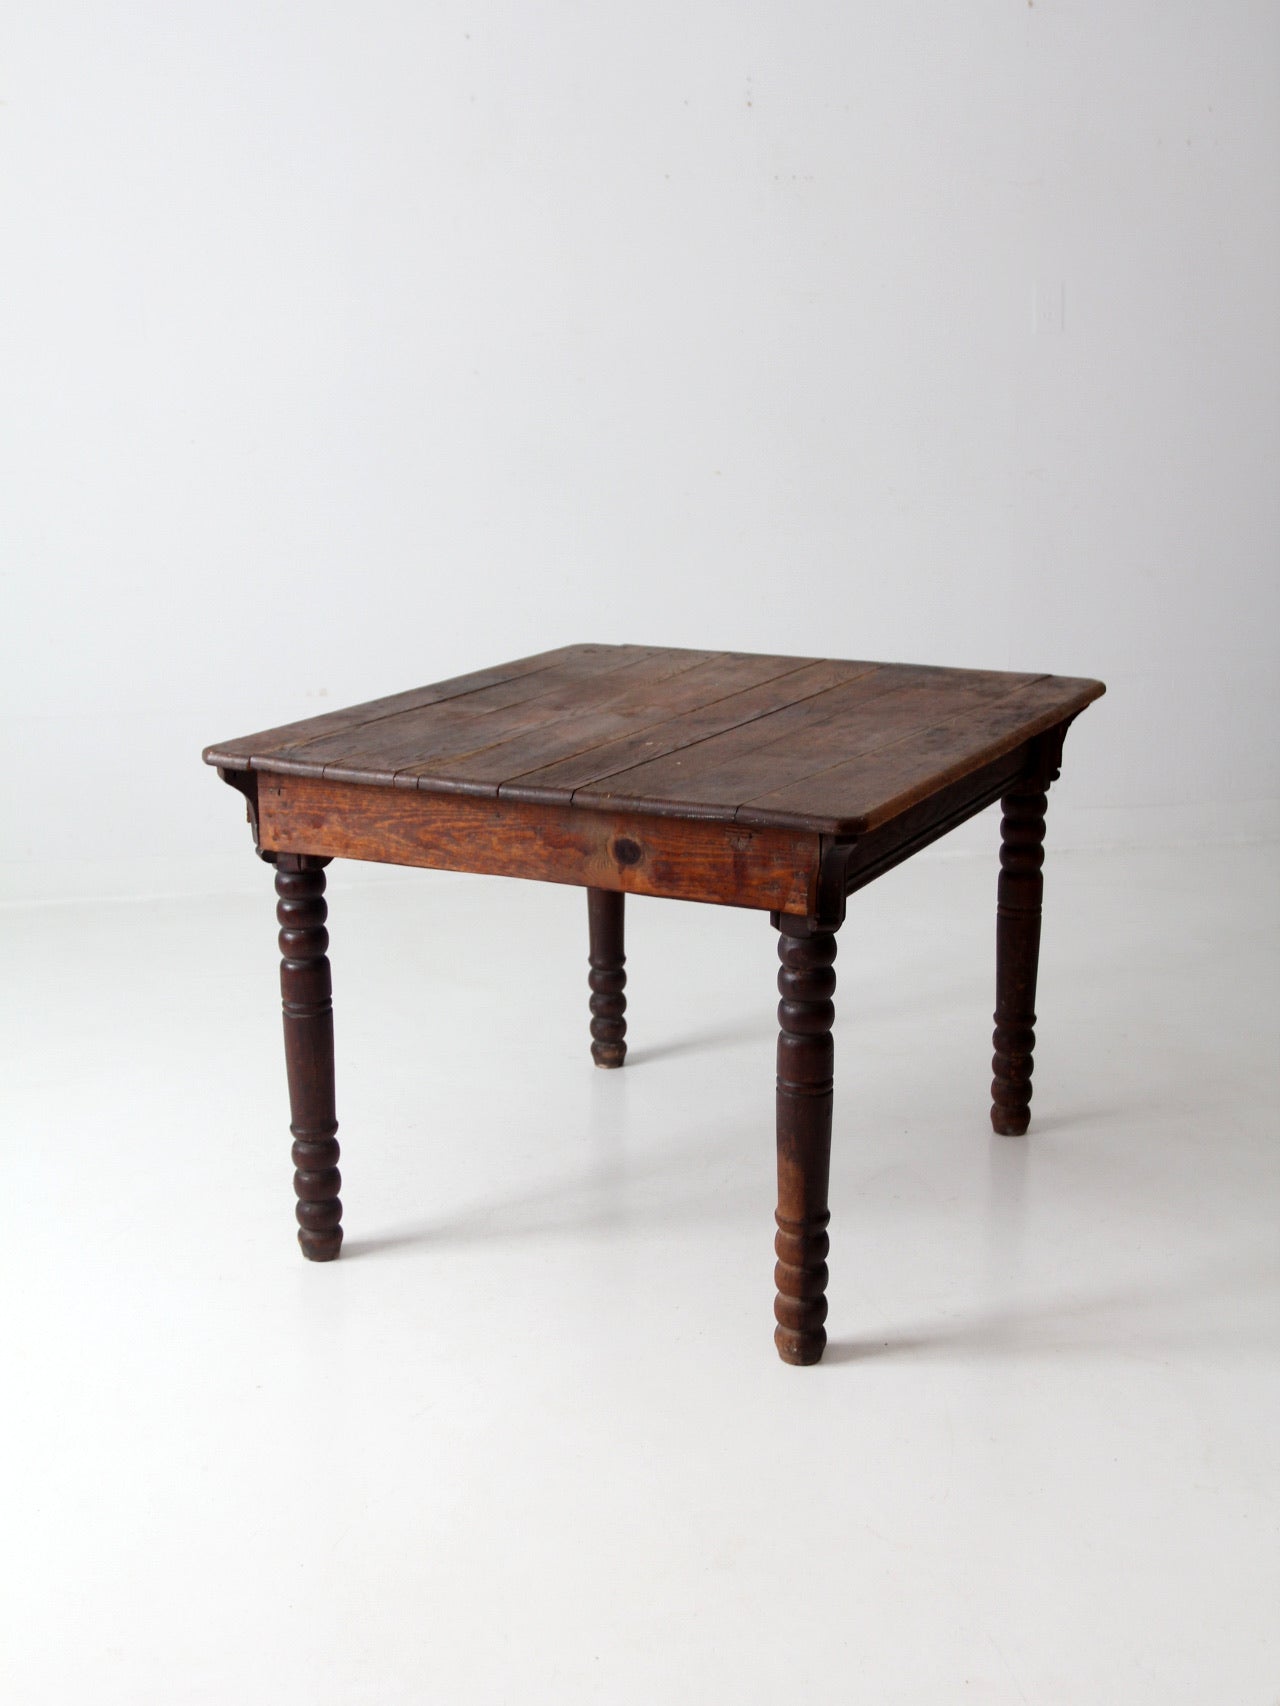 antique wood harvest table